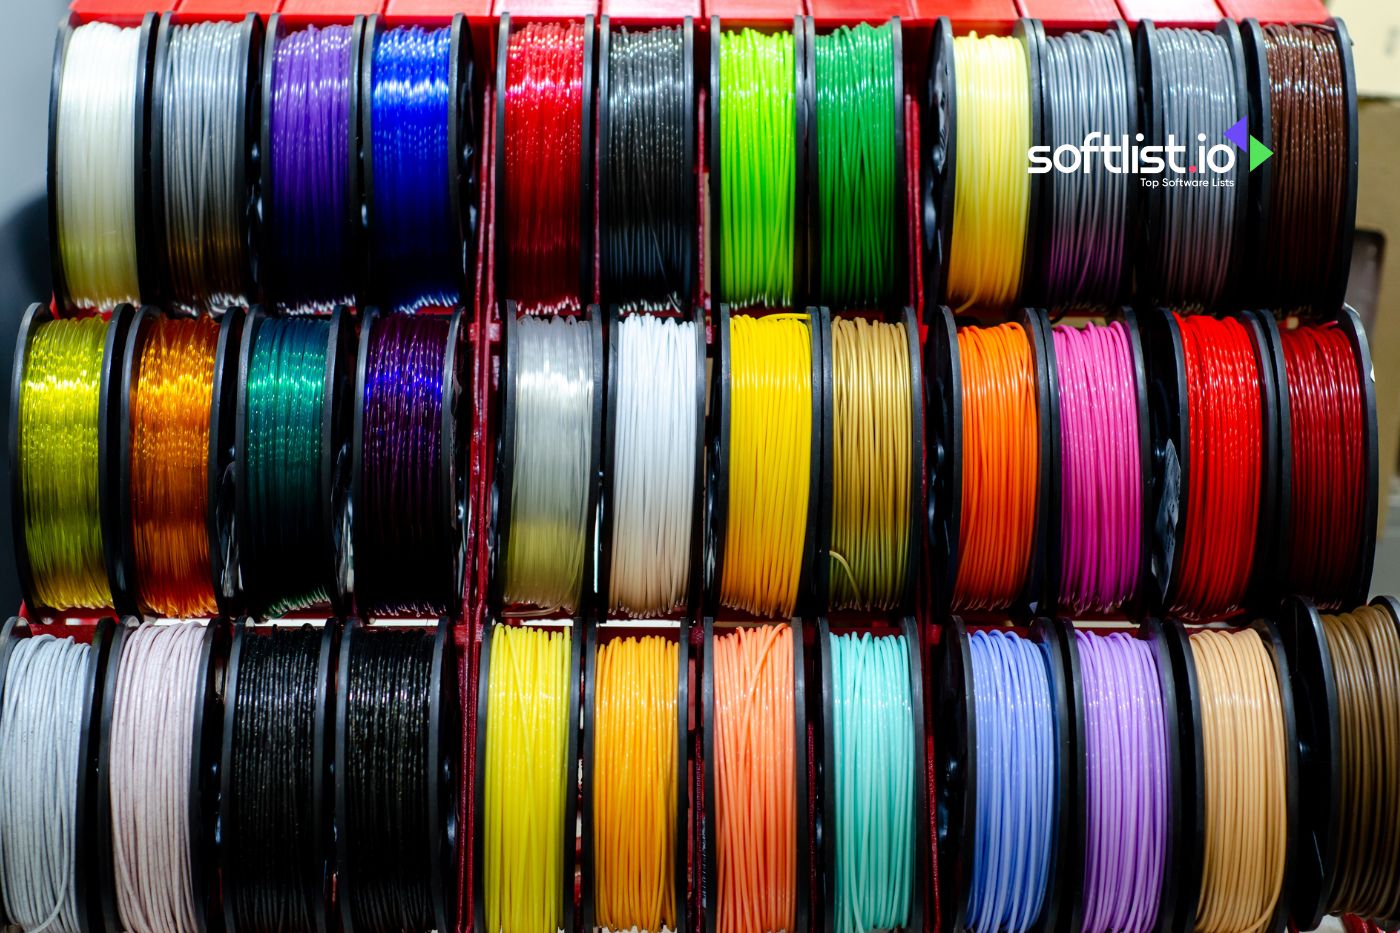 Racks of colorful 3D printing filaments